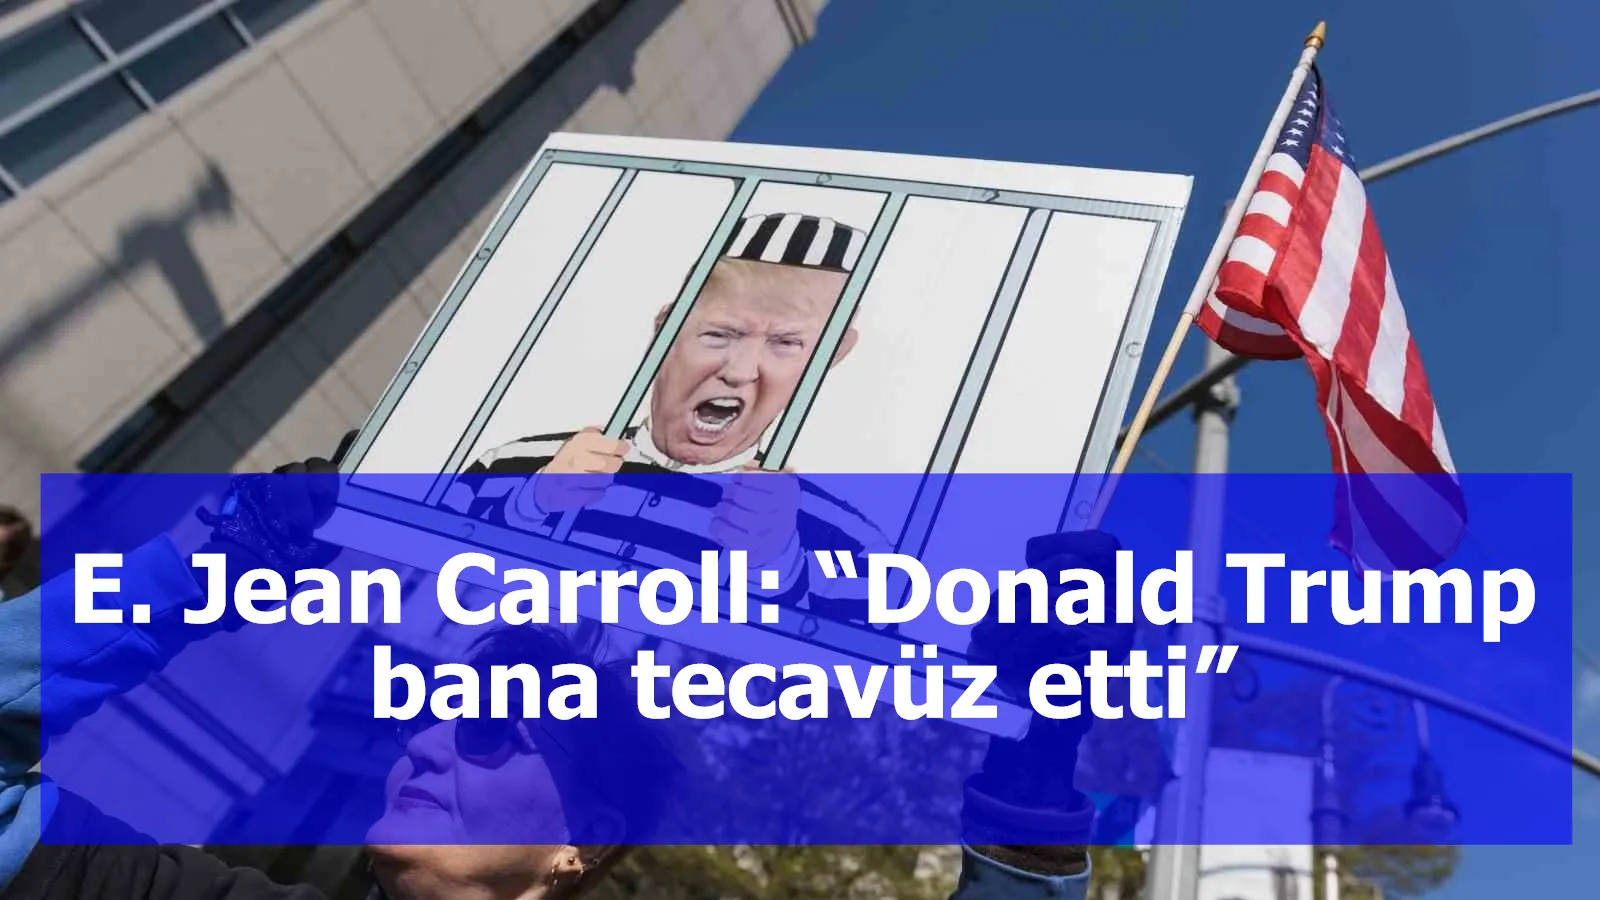 E. Jean Carroll: “Donald Trump bana tecavüz etti”